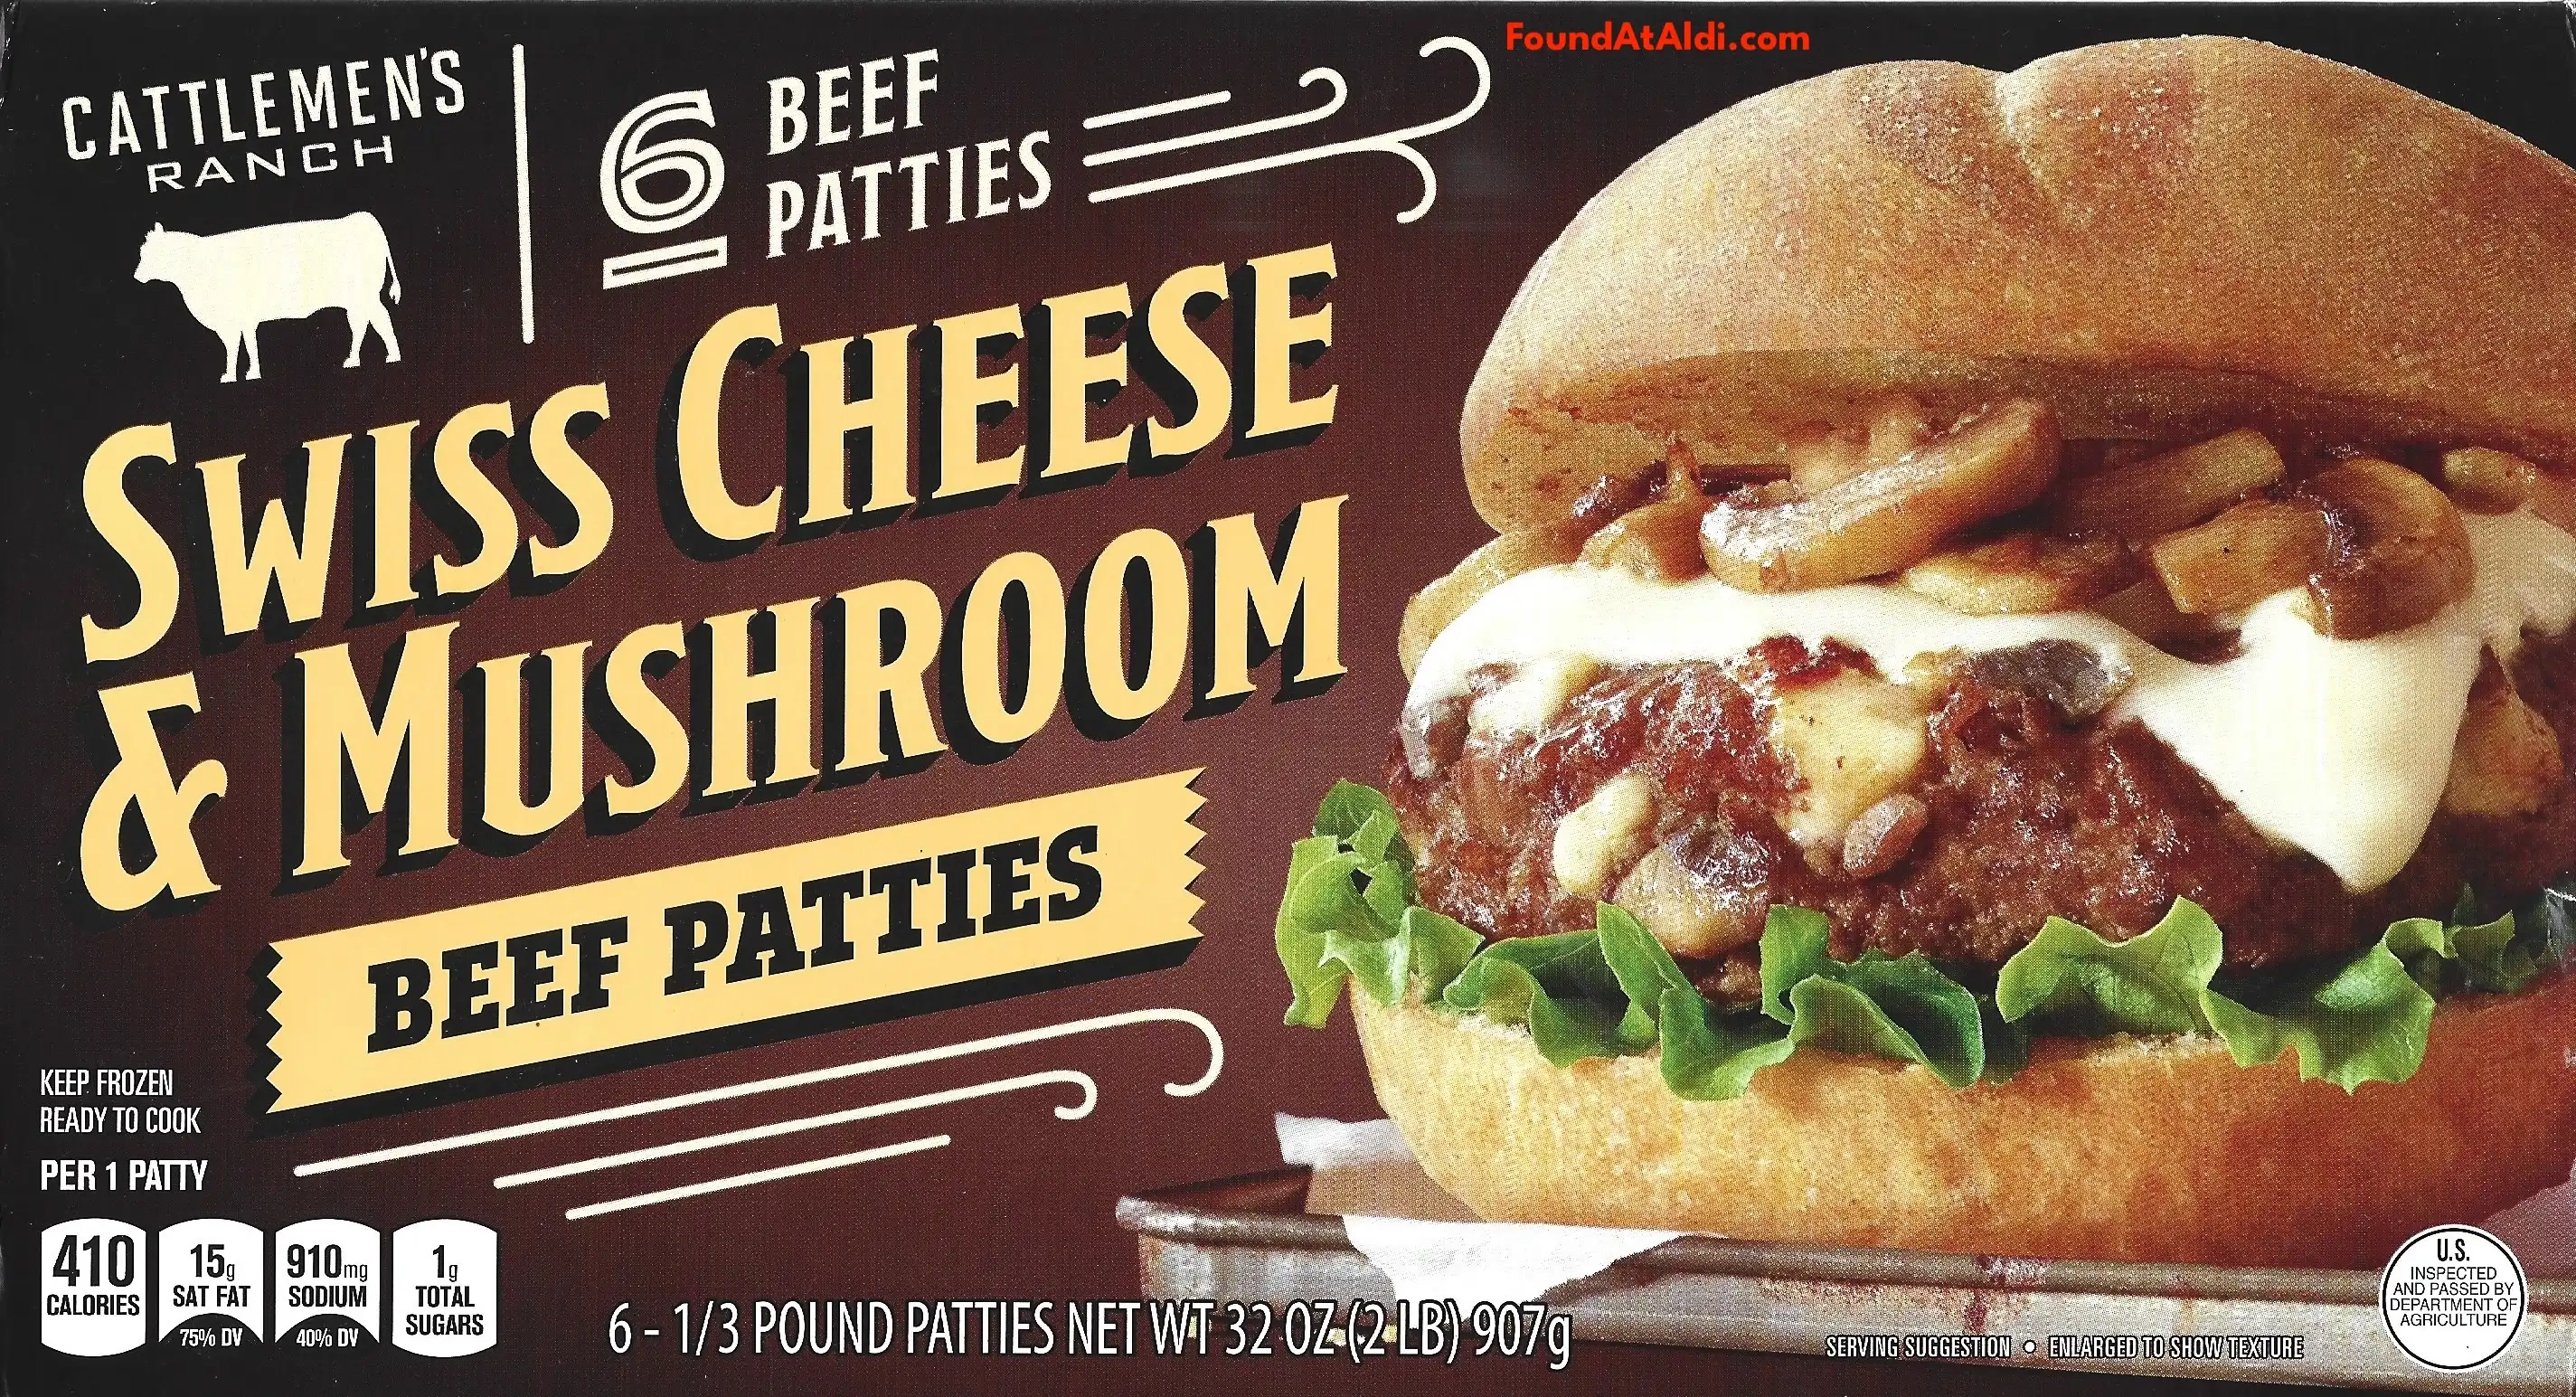 Cattlemen's Ranch Swiss Cheese & Mushroom Beef Patties Burgers